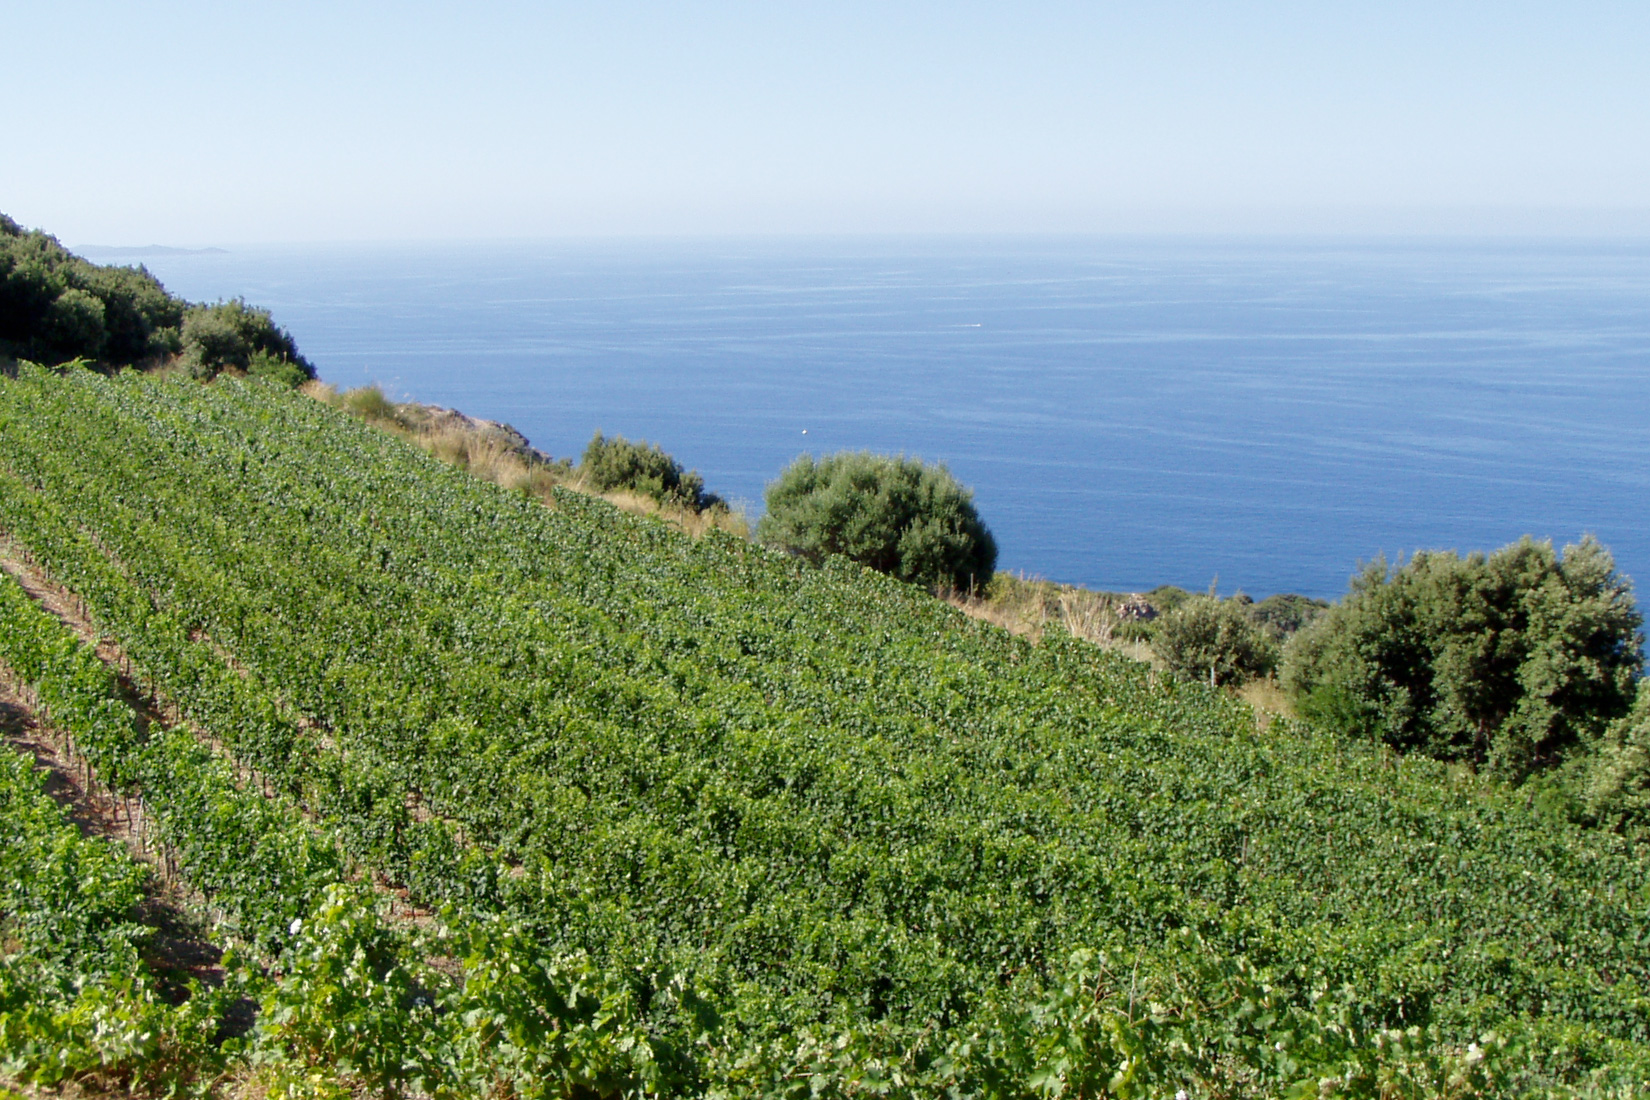 Vineyards and views